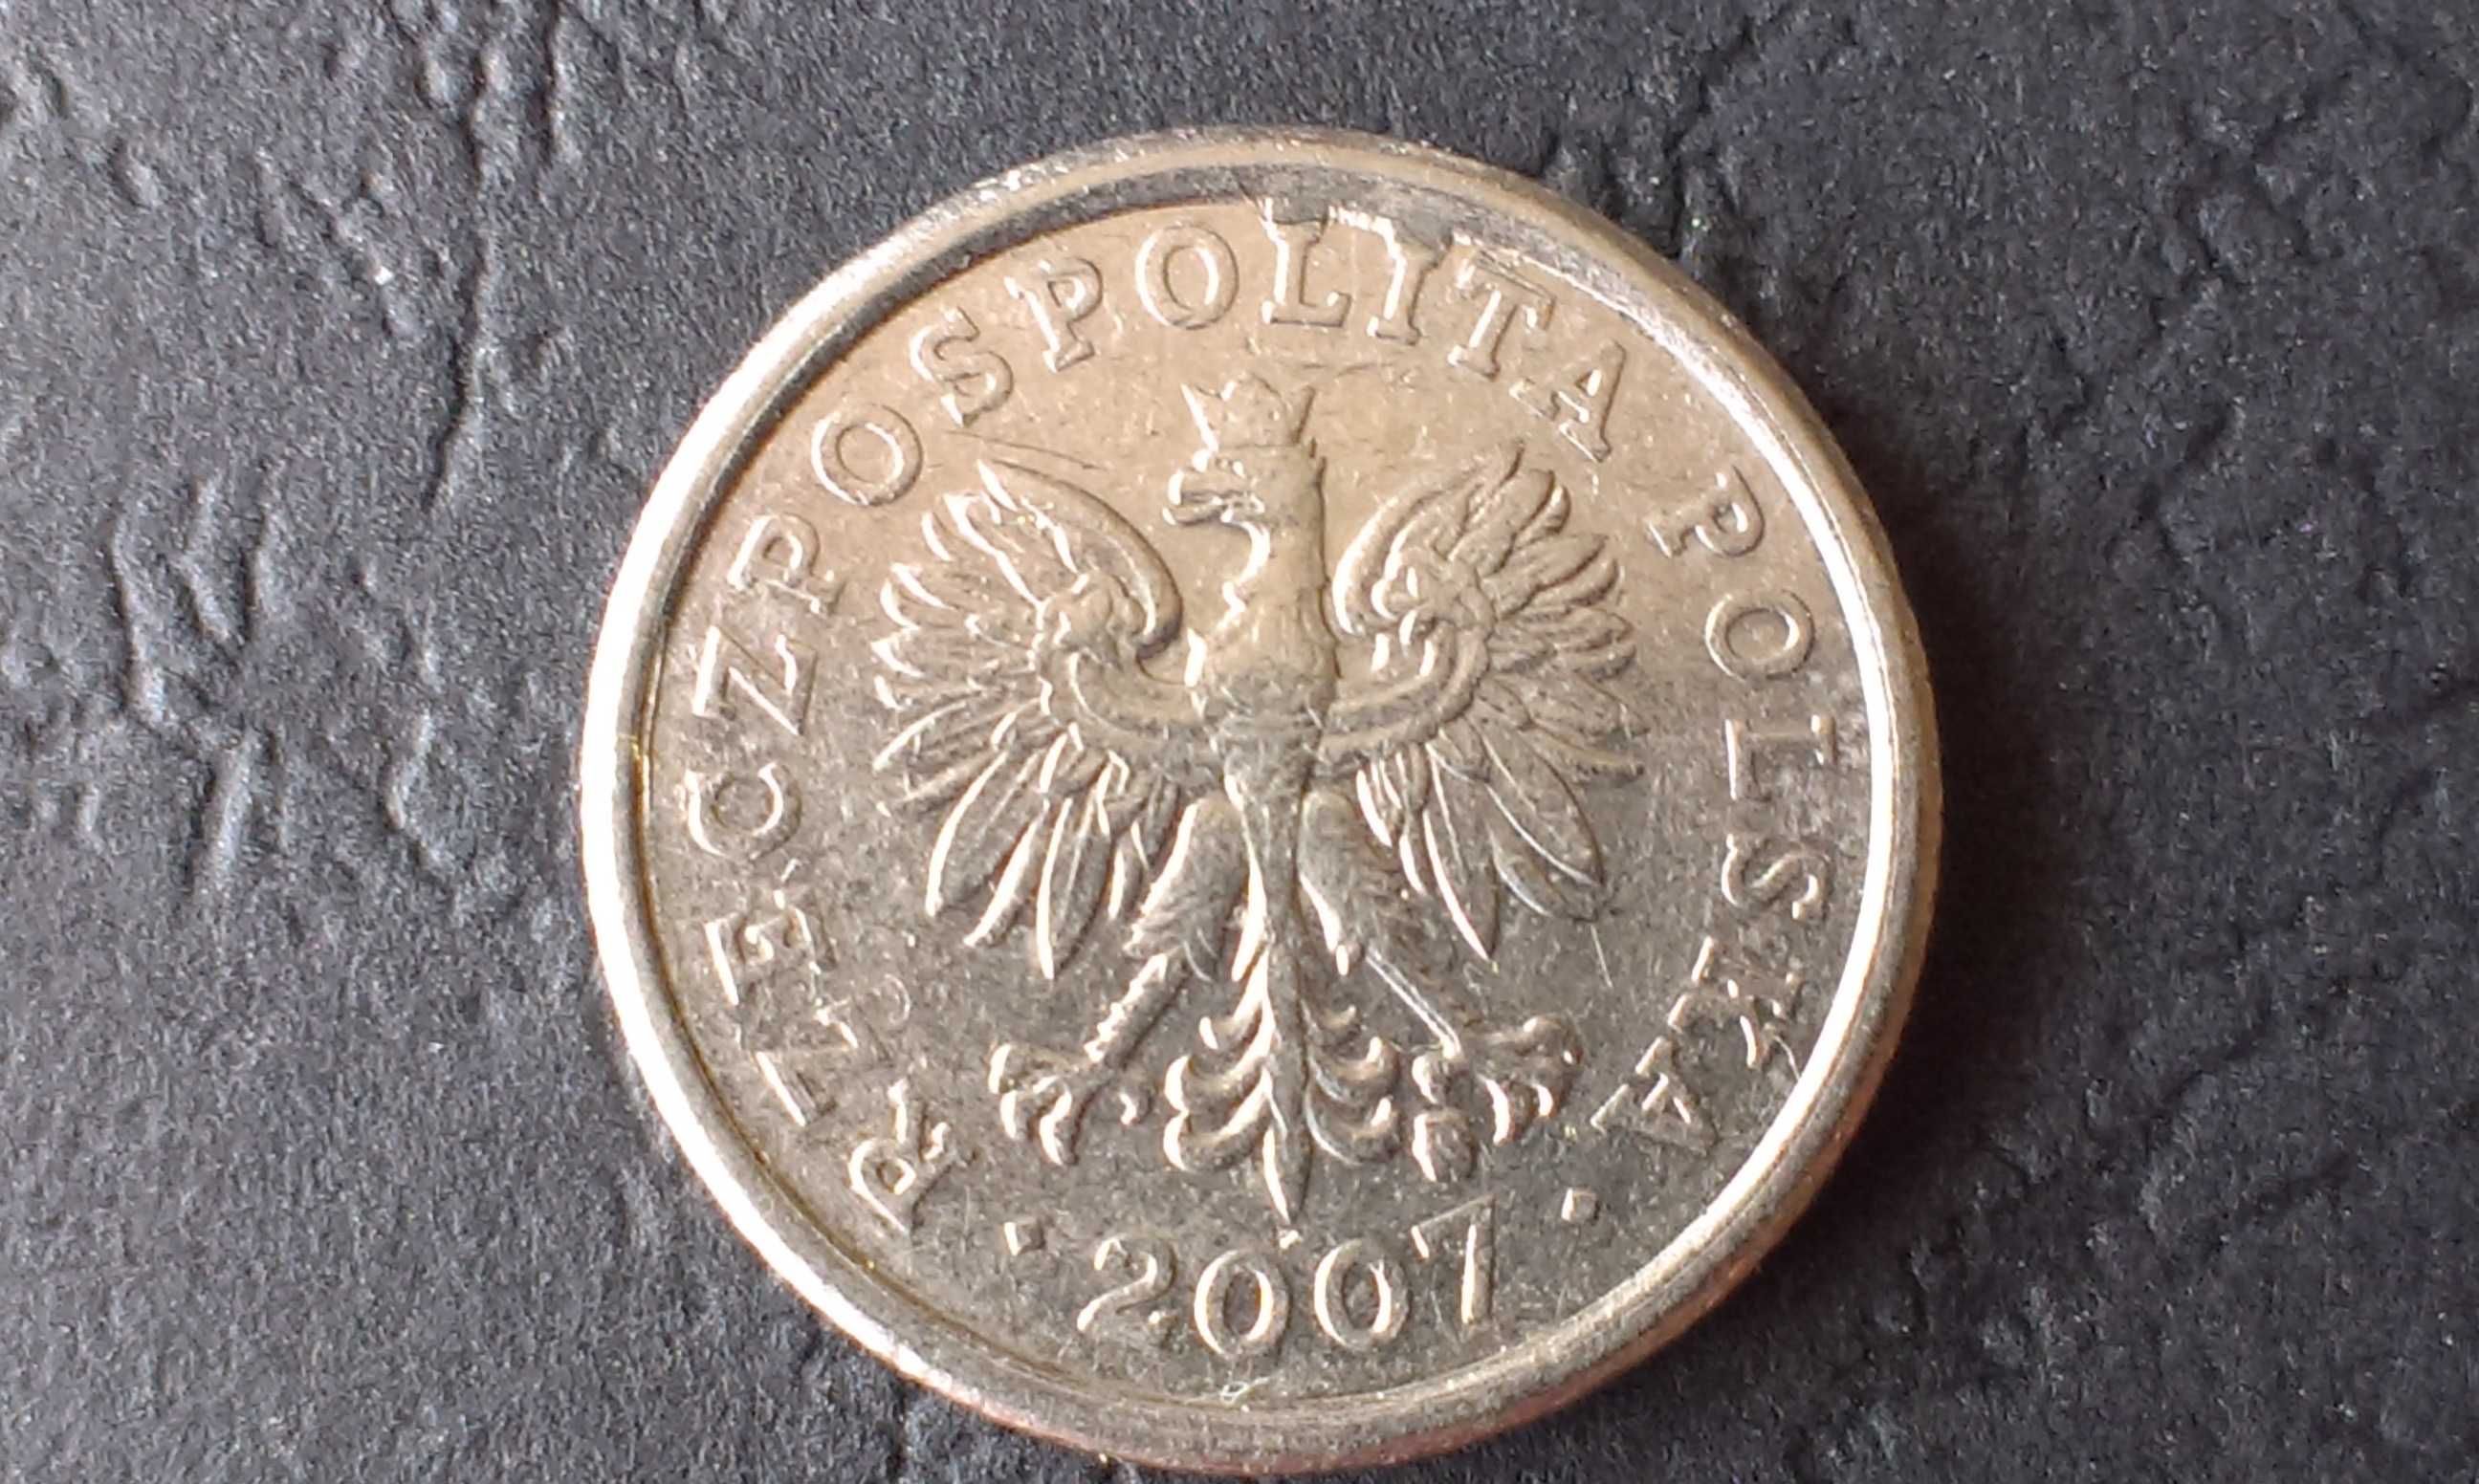 Destrukt moneta 20 groszy 2007, dwie litery zlane z rantem.